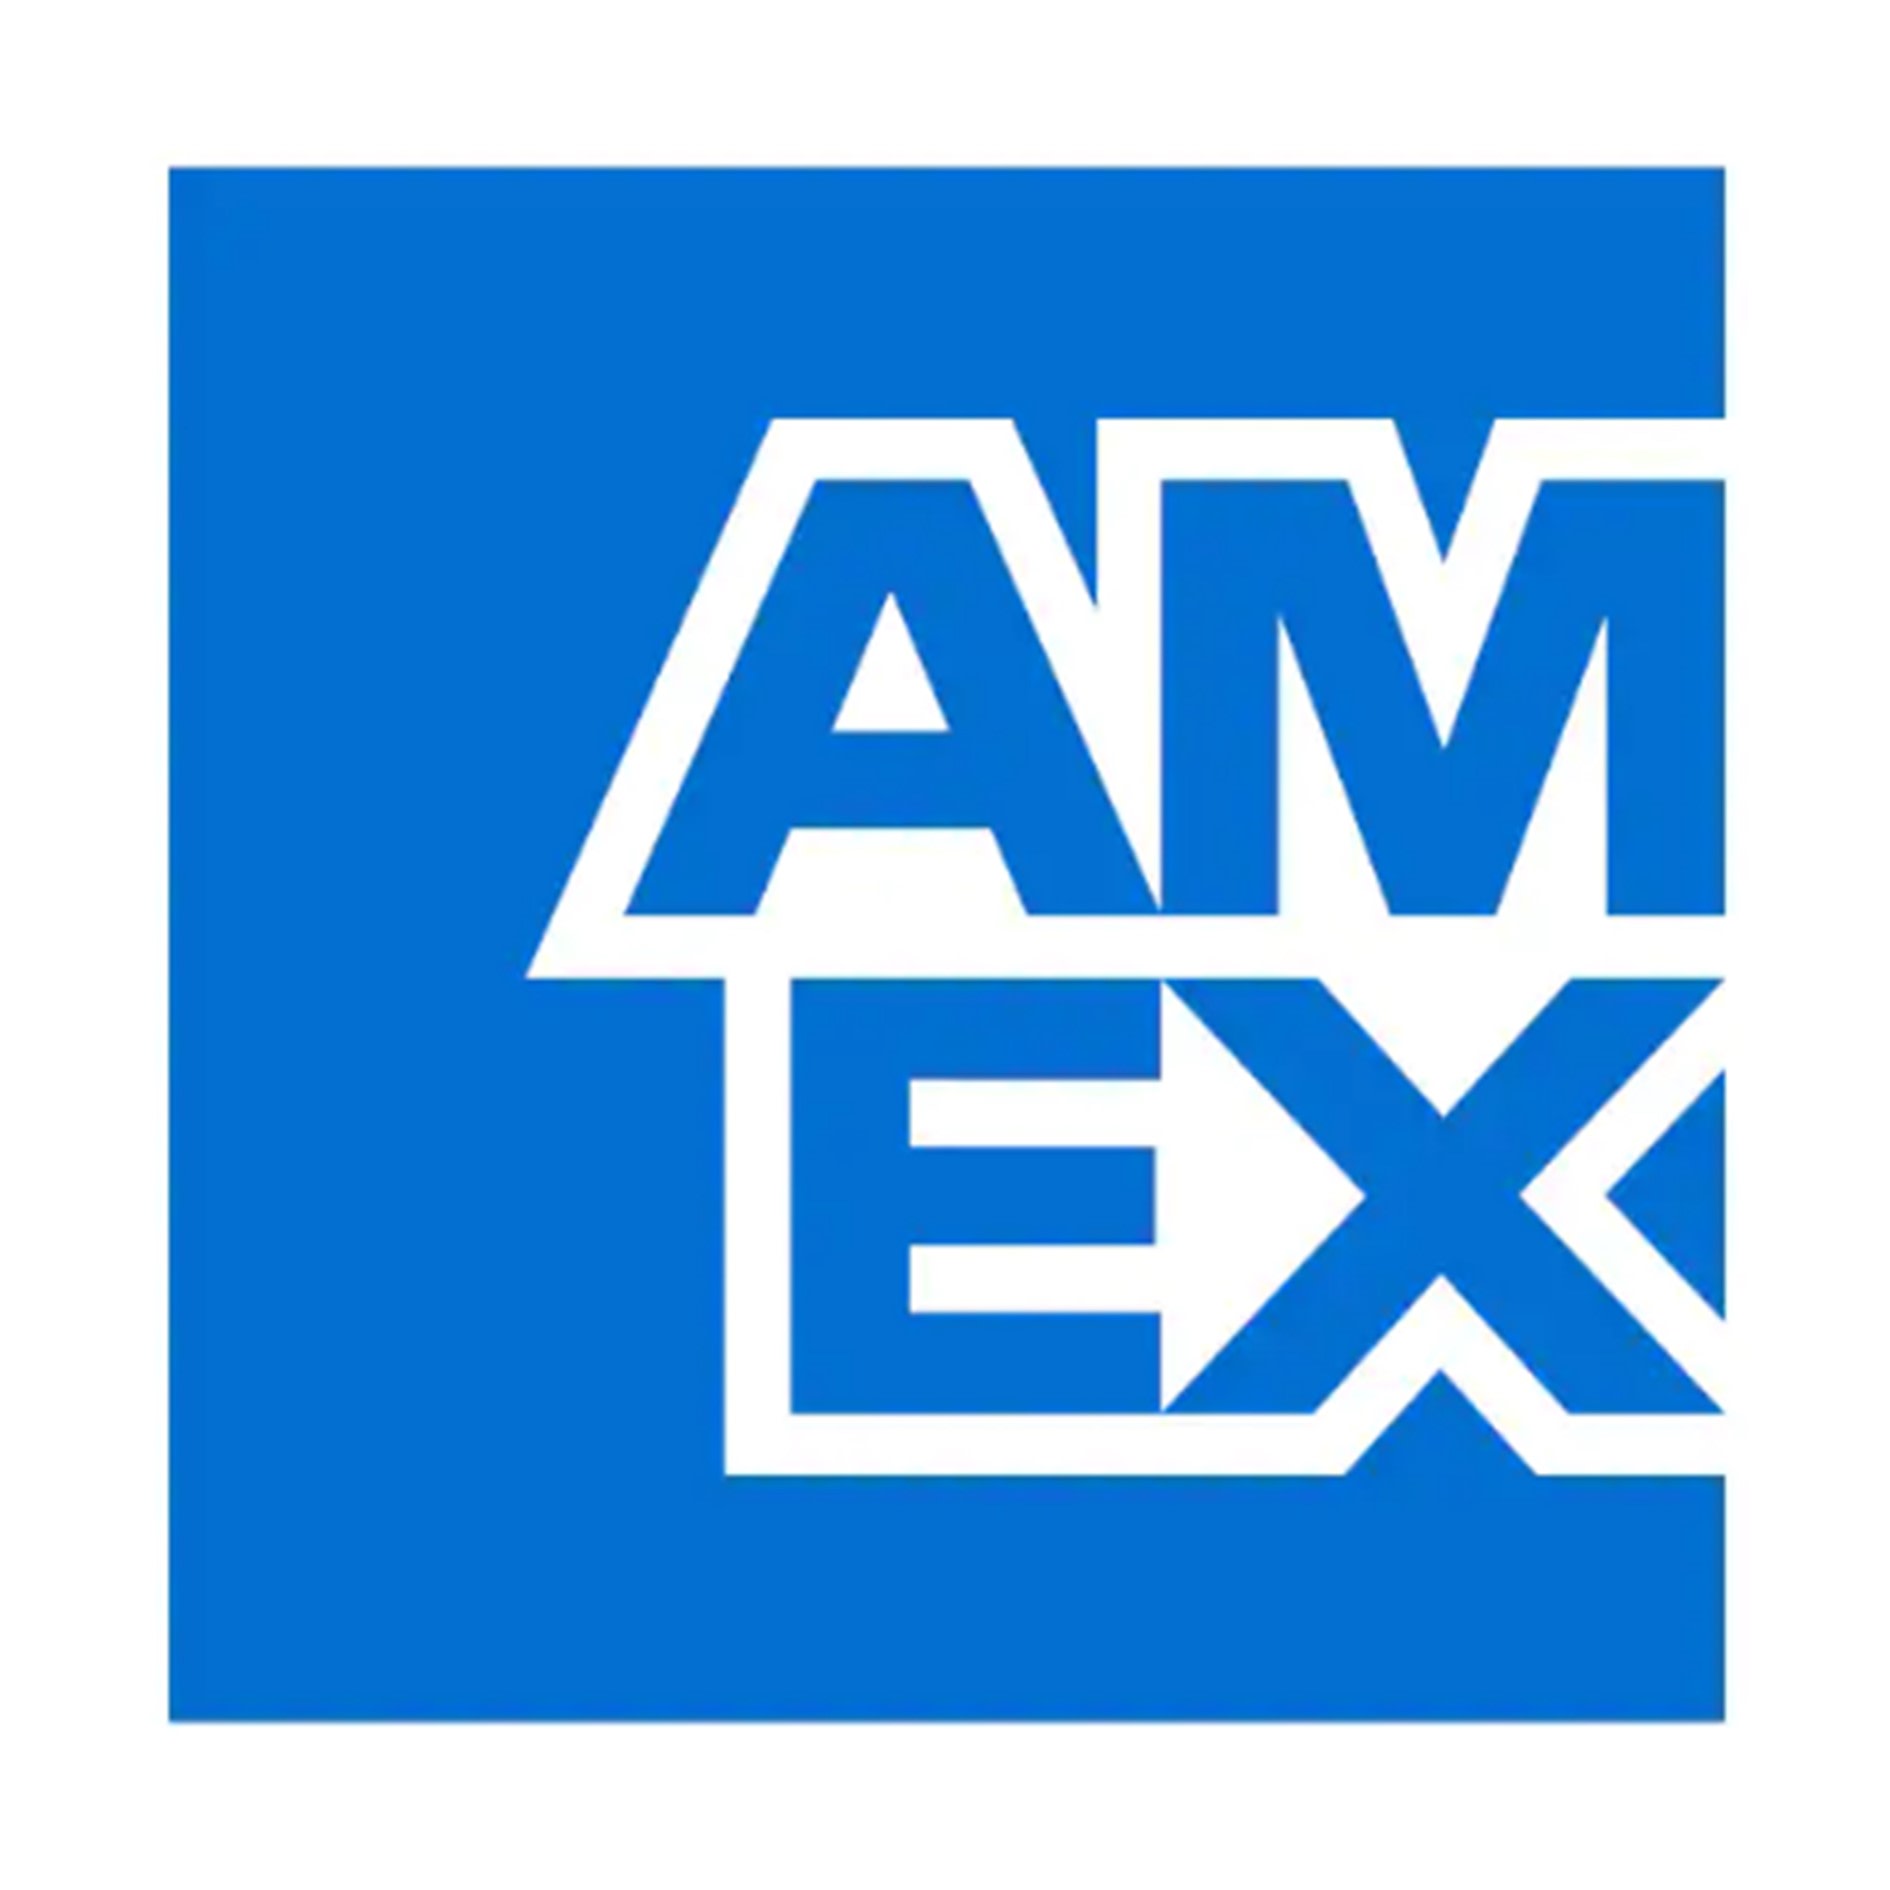 Santander Amex